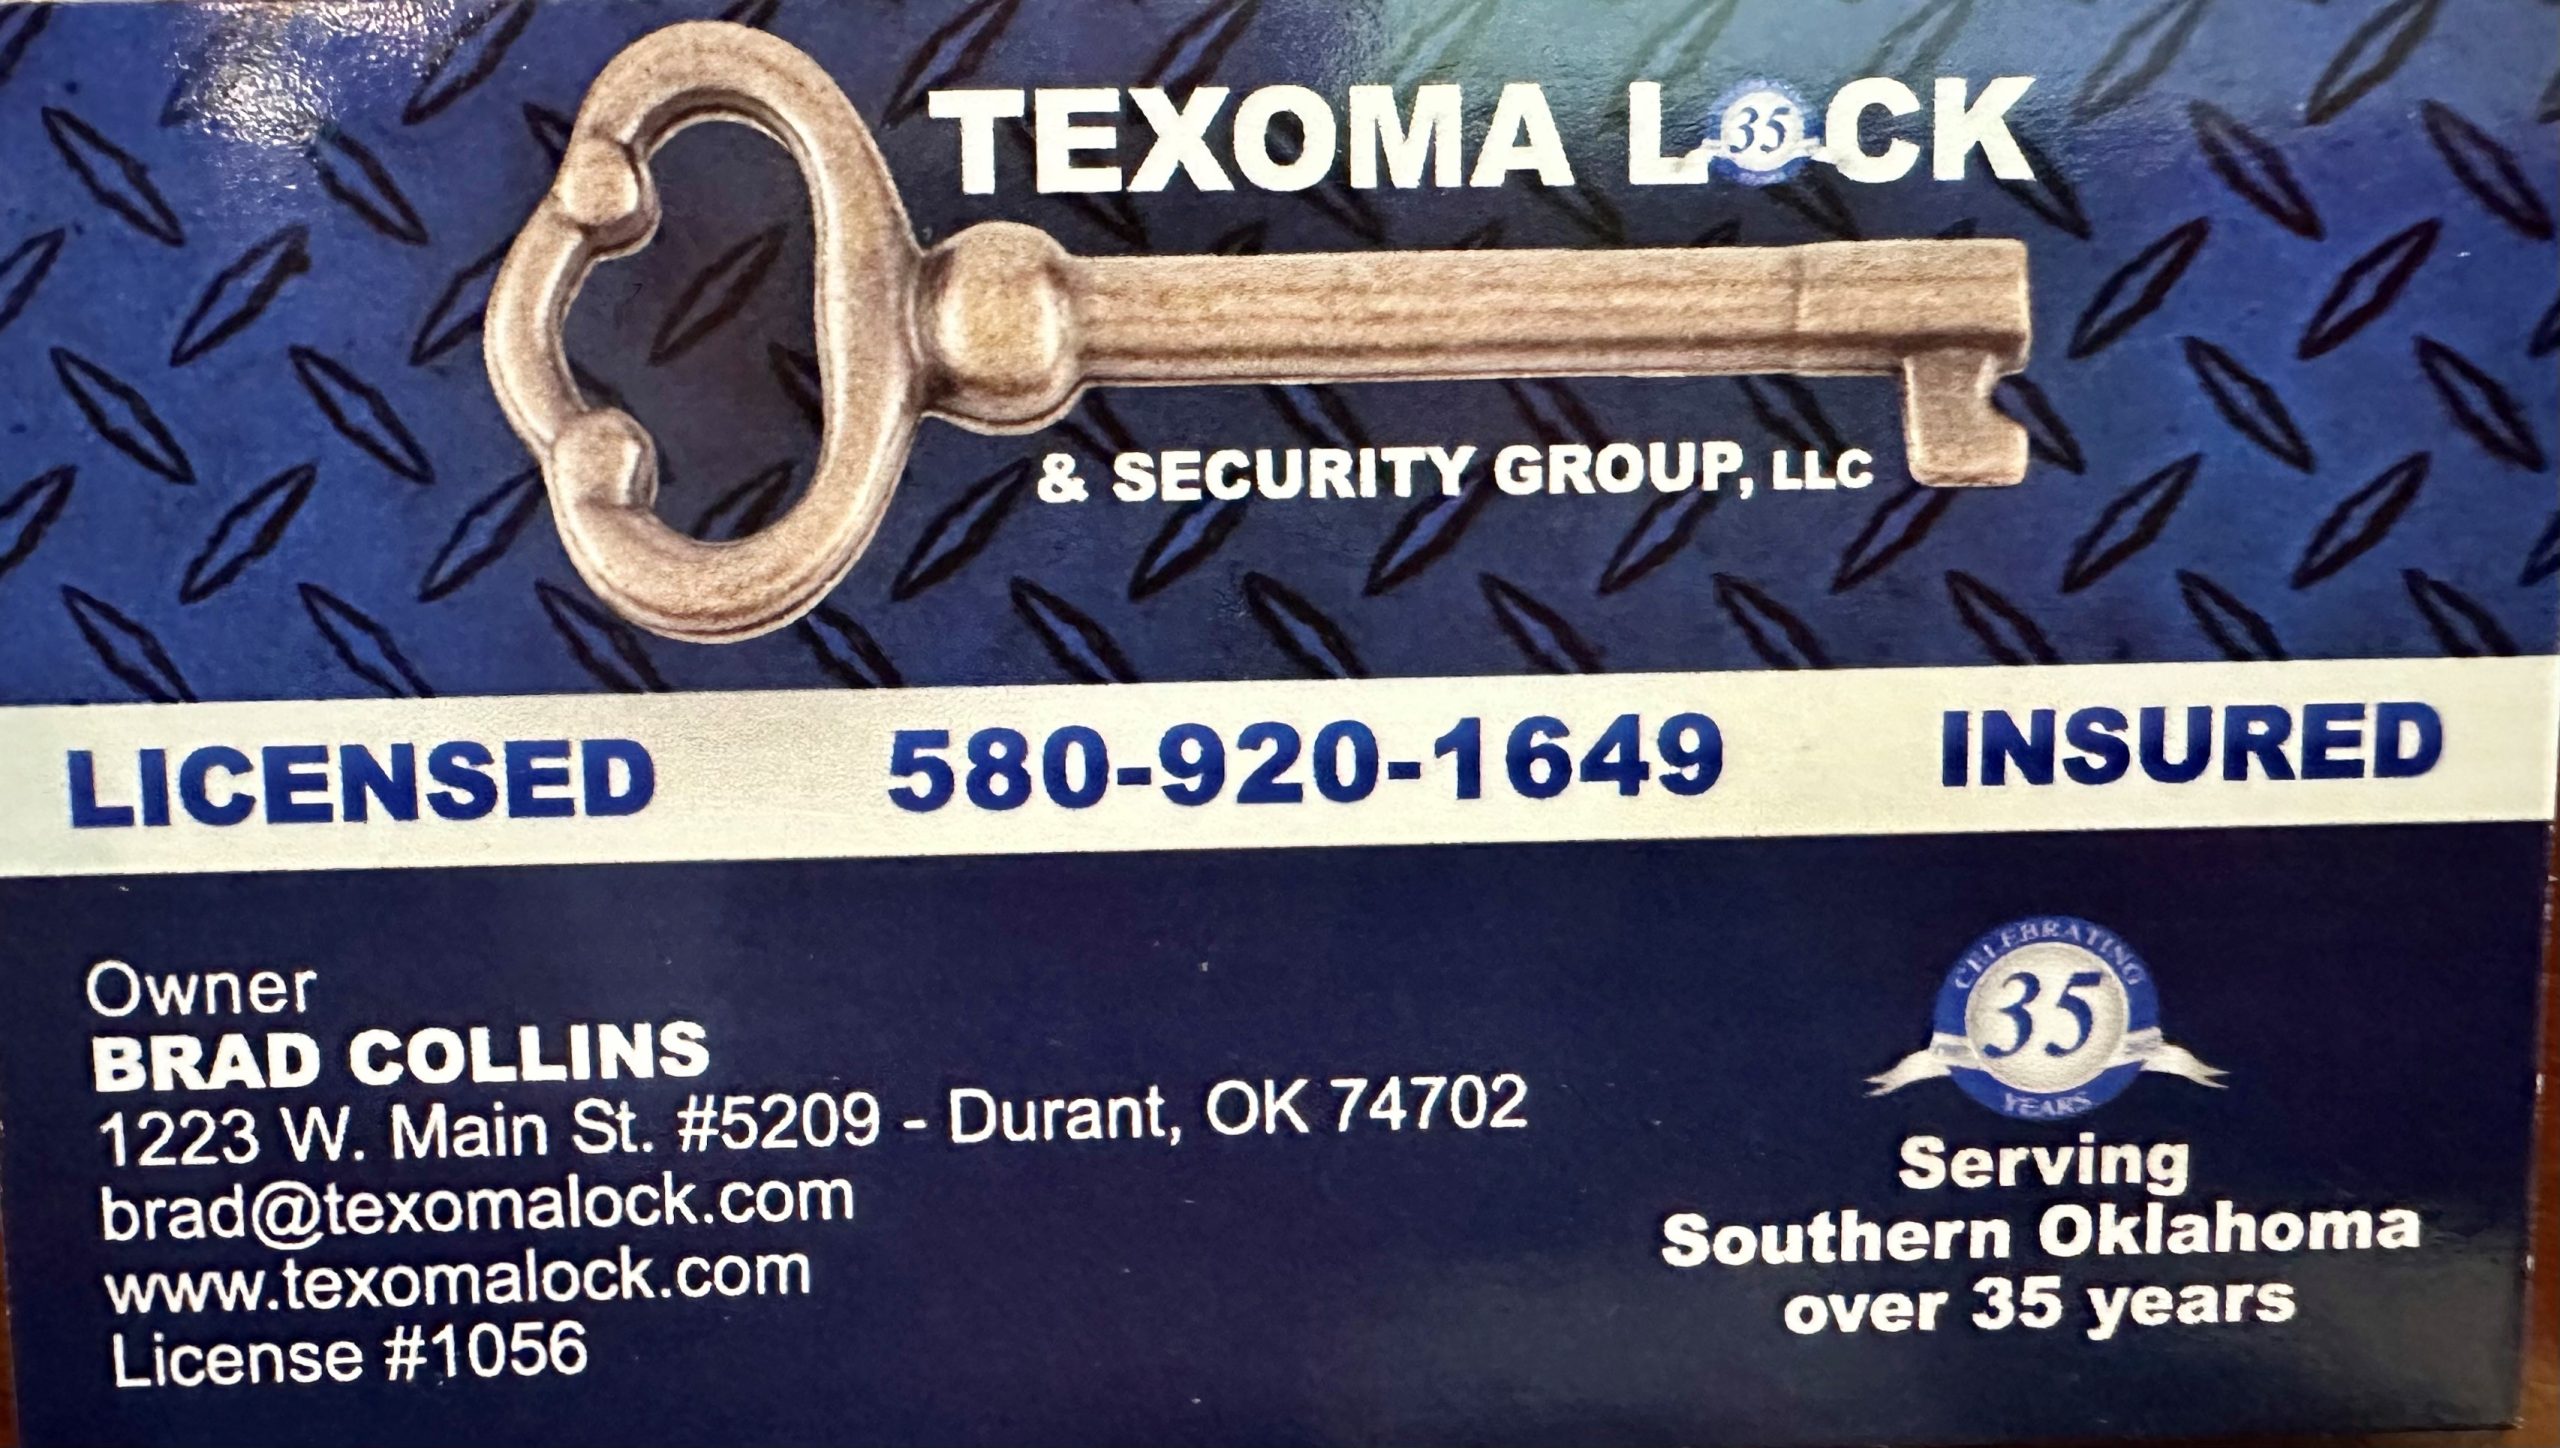 Texoma Lock & Security Group